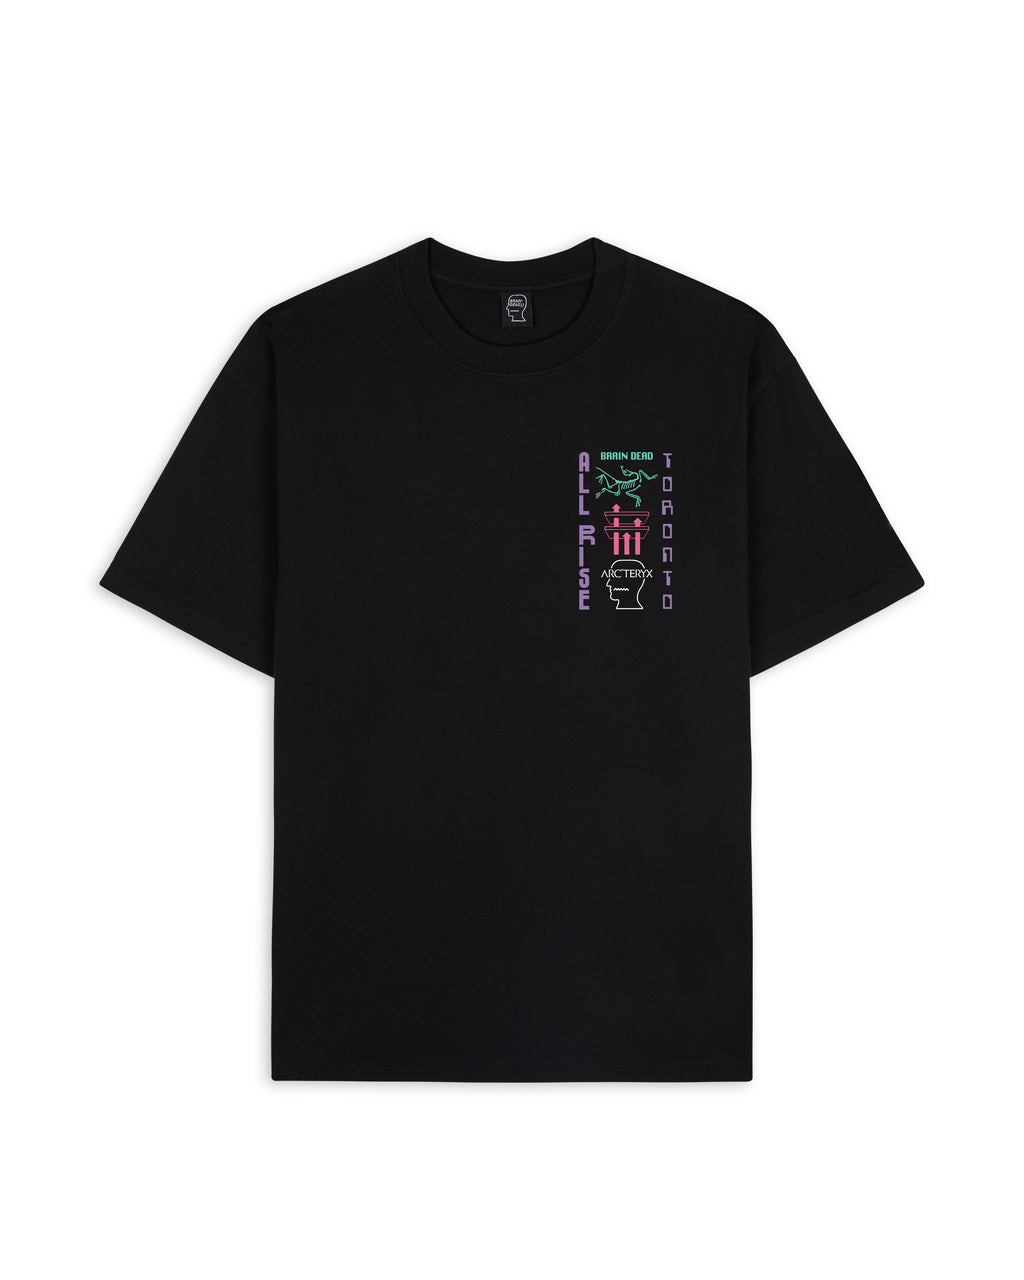 All Rise Toronto T-shirt - Black 1